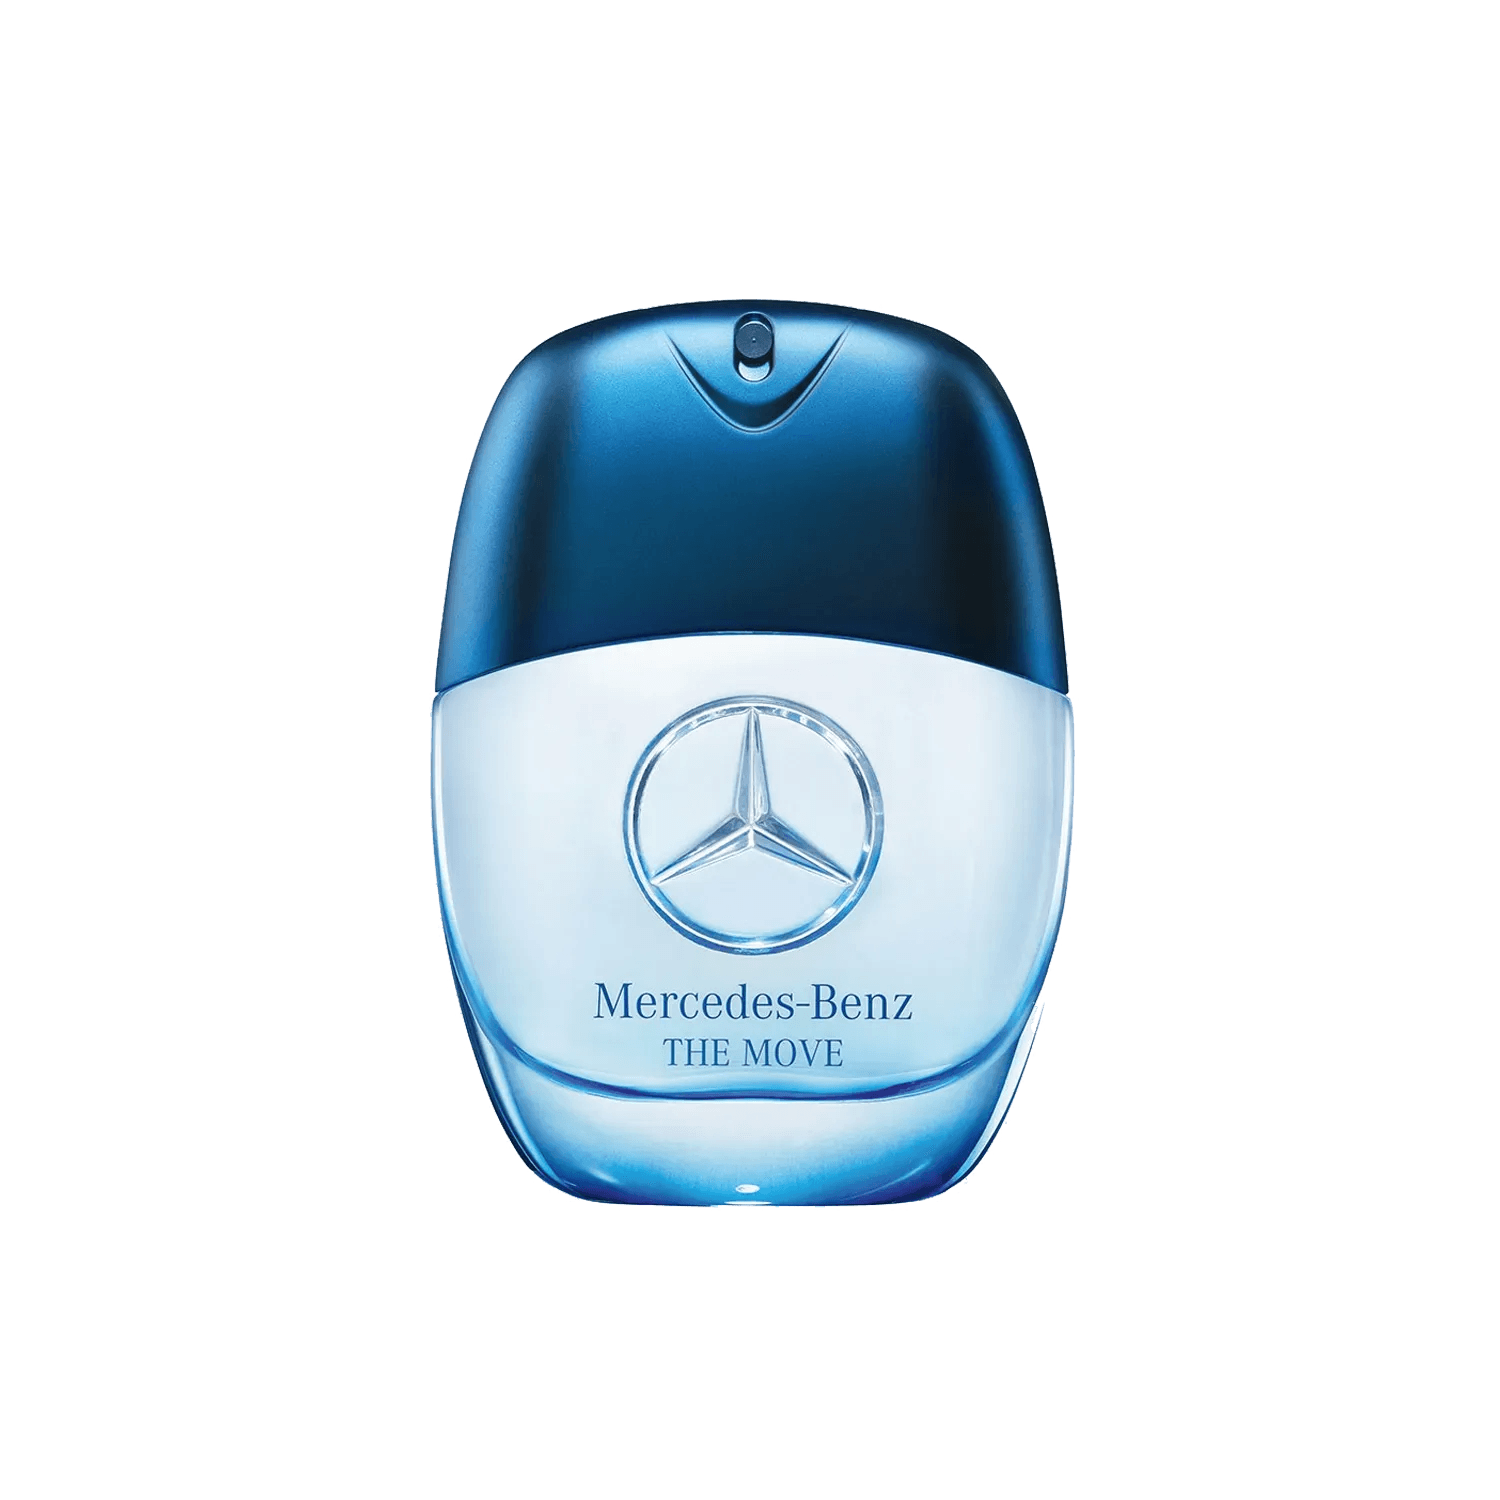 Plain Mercedes Car Logo, Packaging Type: Packet at Rs 550/unit in Delhi